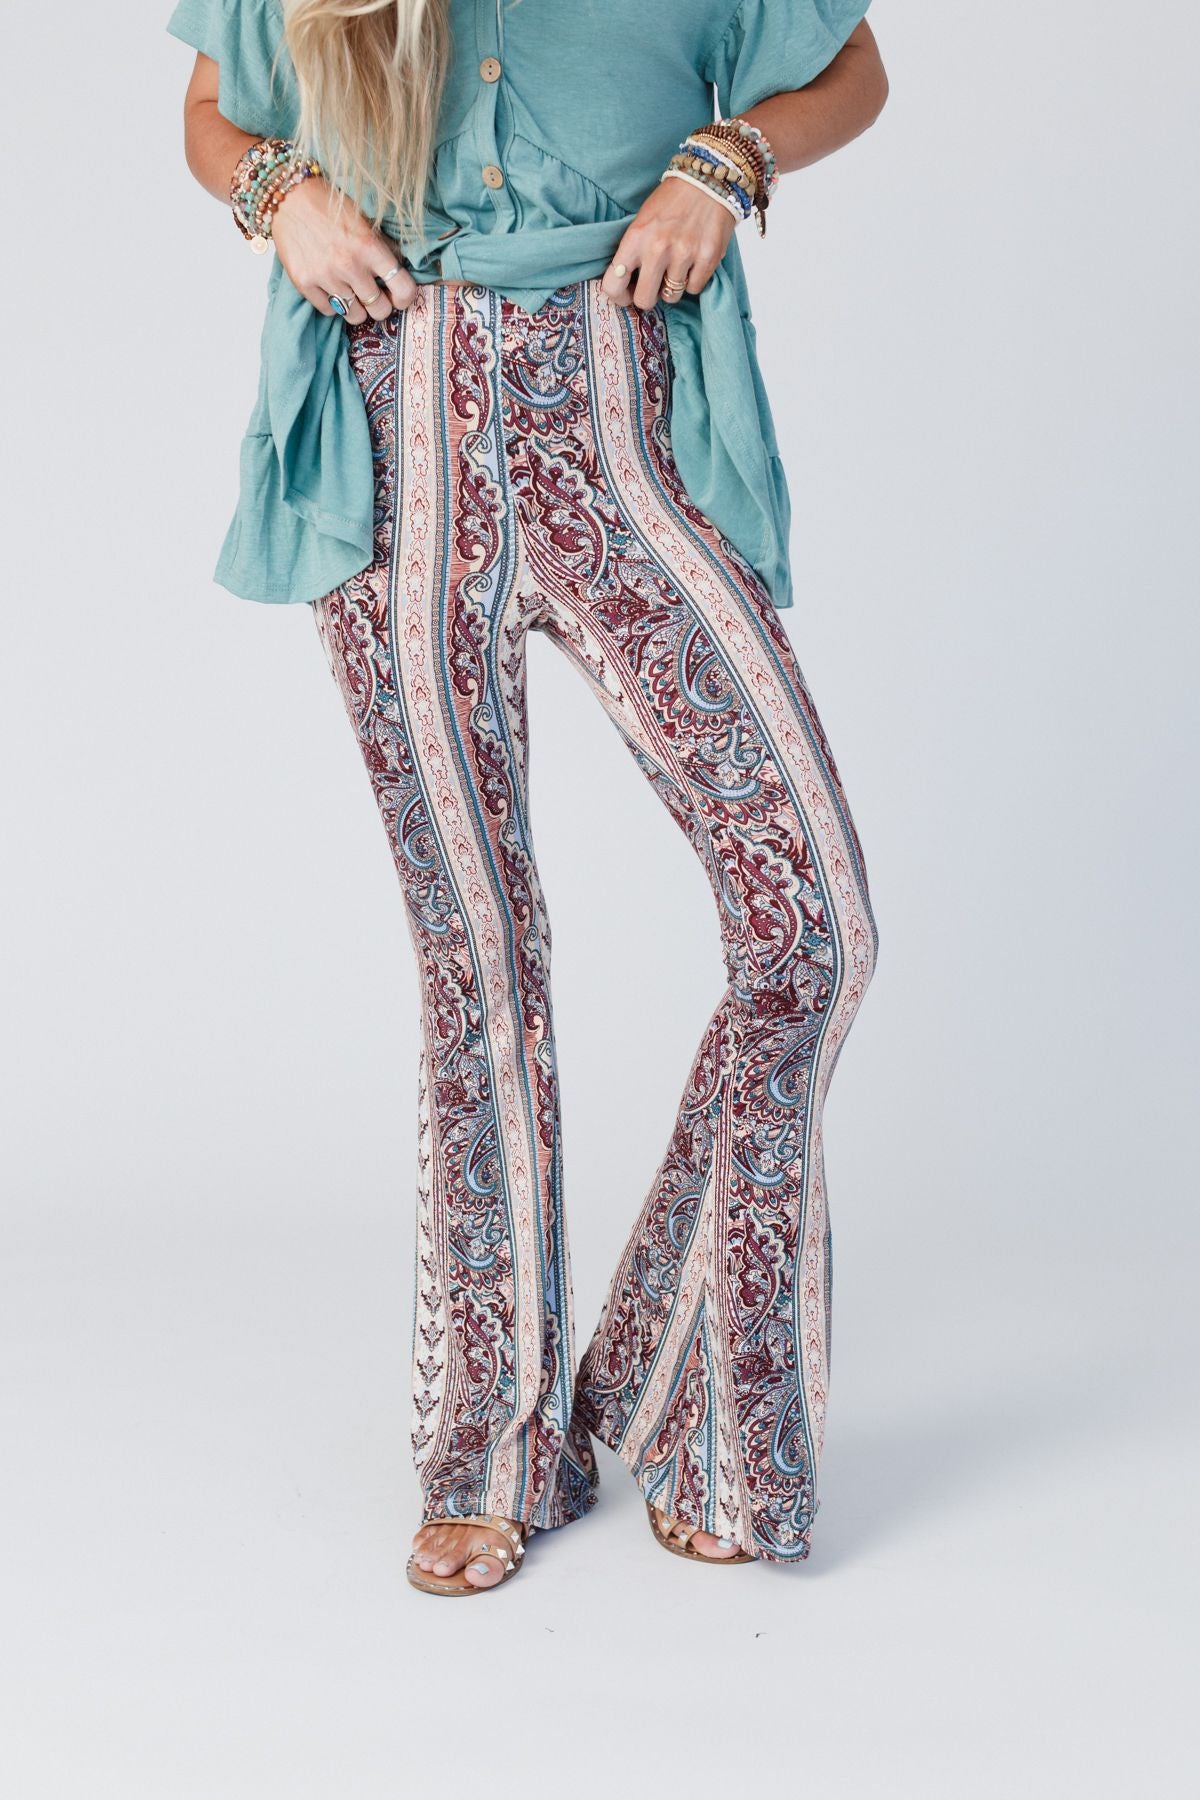 2x Women's Floral Print Harem Pants Boho Yoga Pants Long Beach Pants -  Trang phục nữ